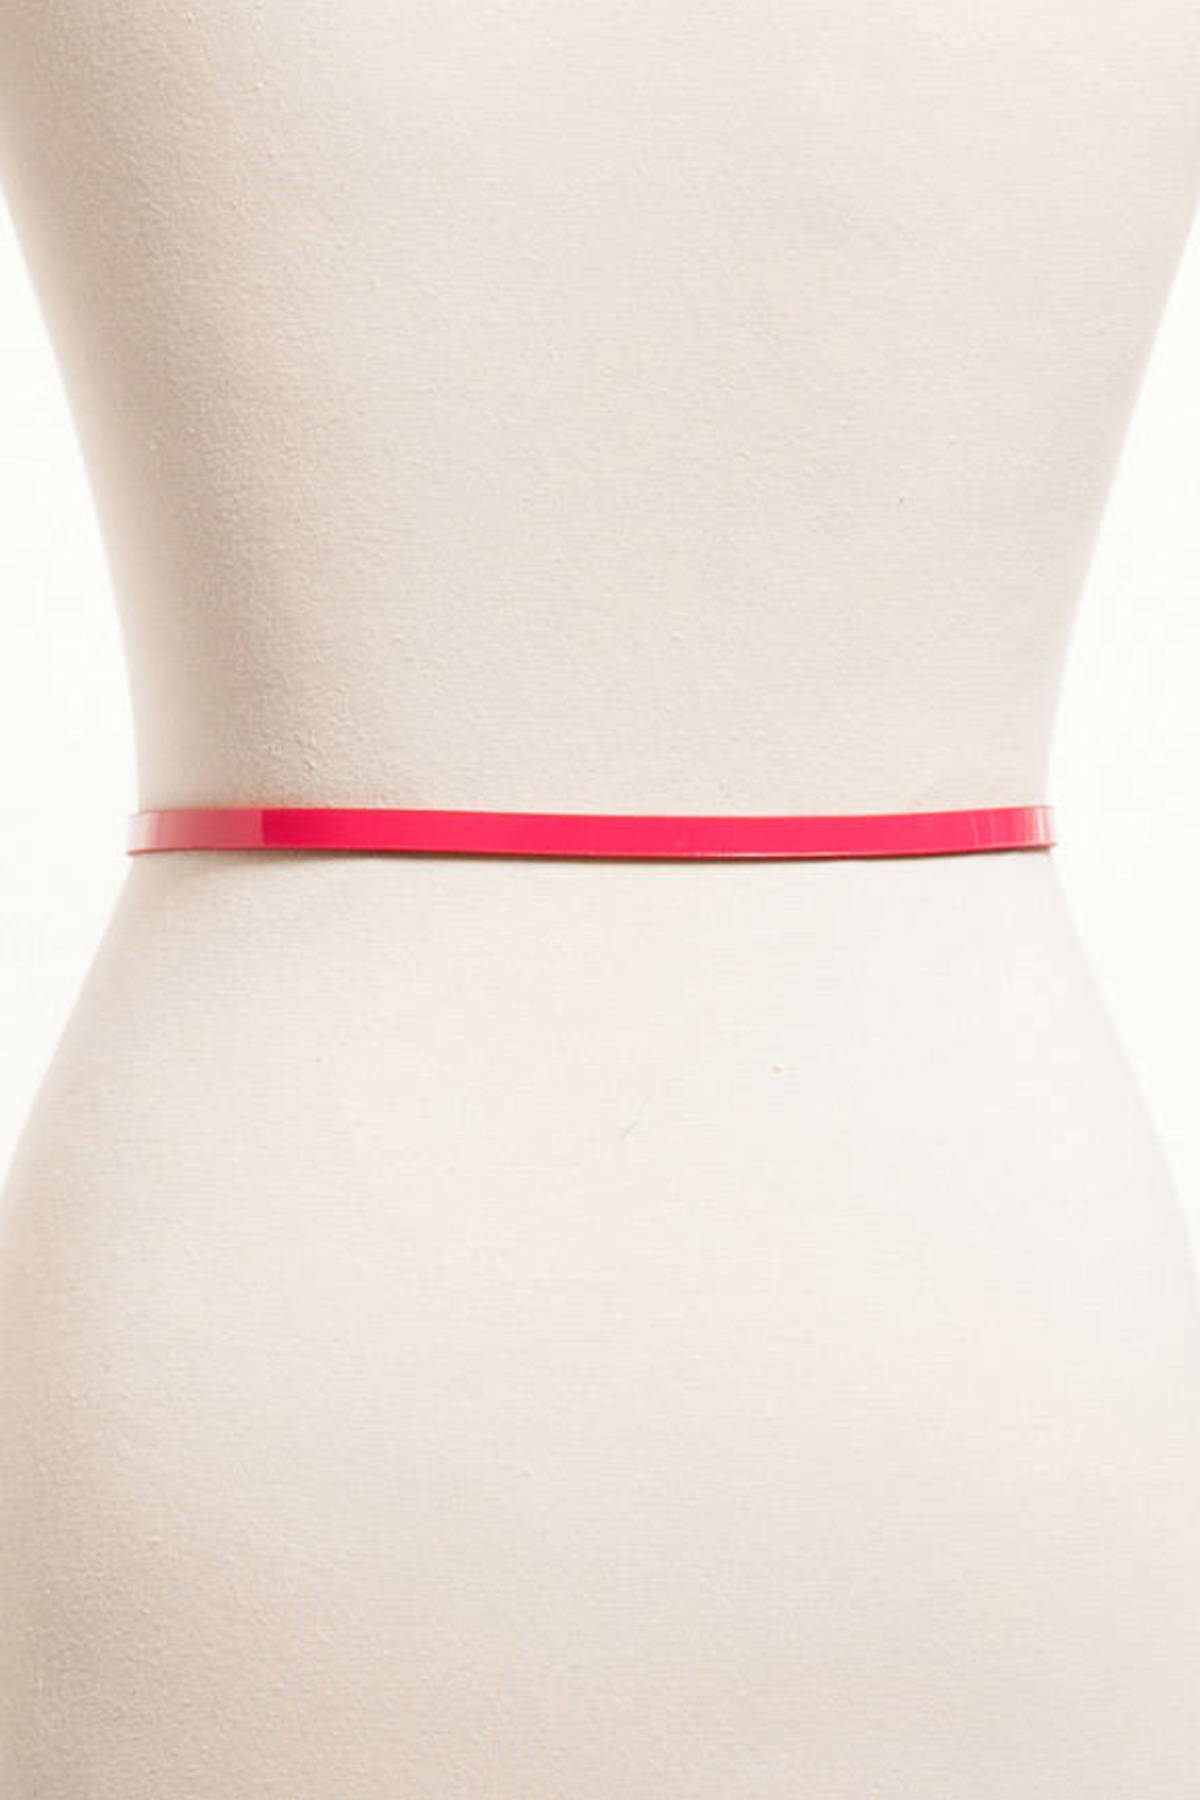 Skinny Patent Belt in Hot Pink - $4 | Tobi US